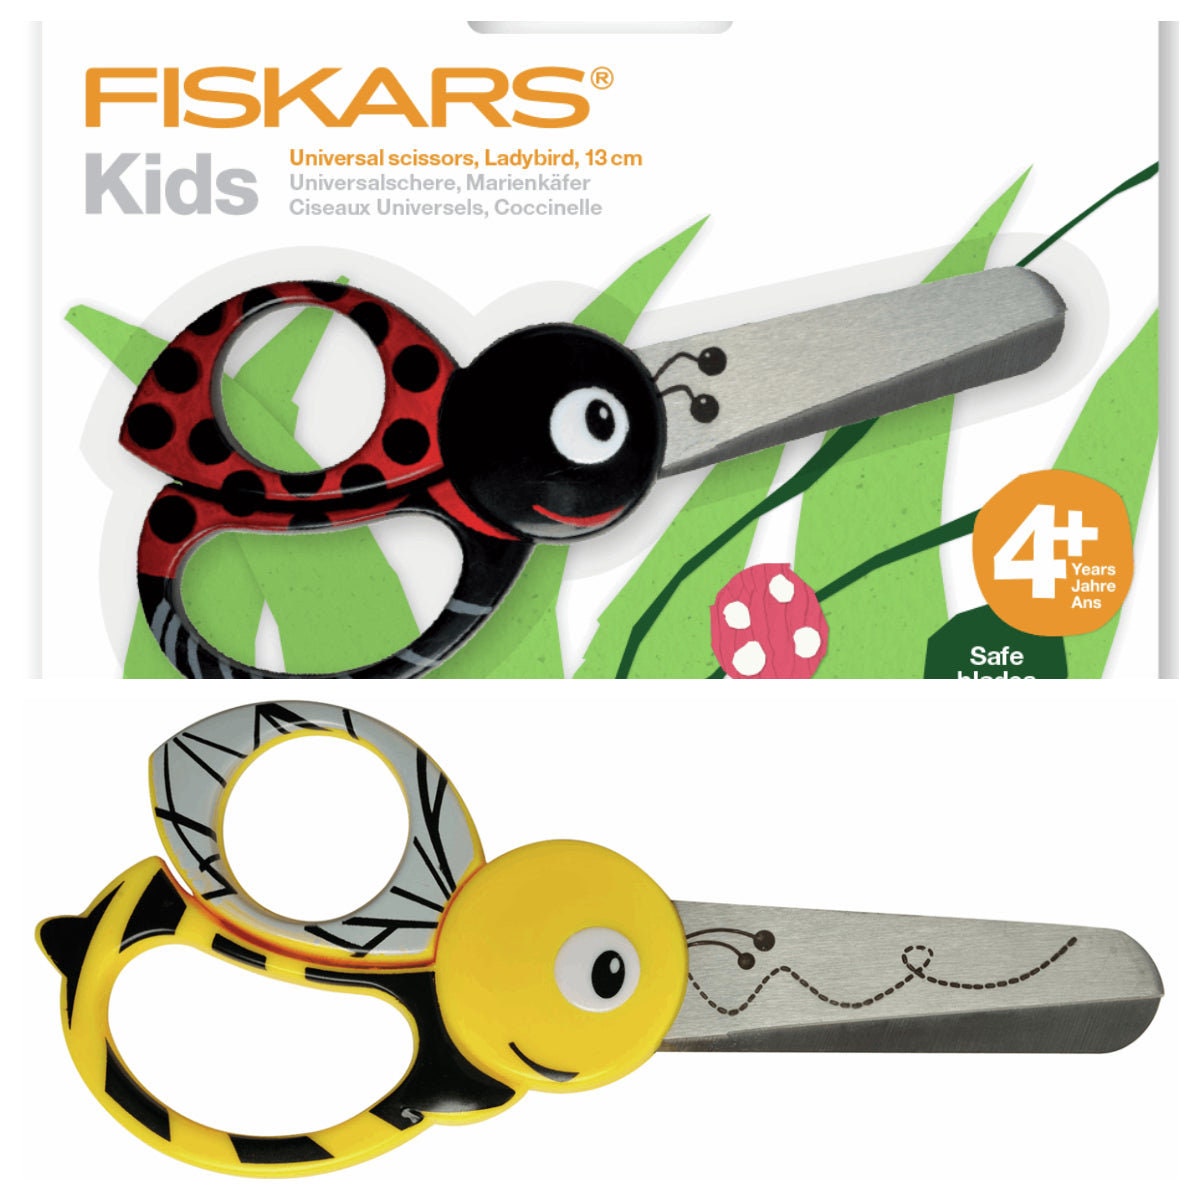 Faber Castell Spring Kids Scissors Children Toddler Safety Scissor 2pcs 